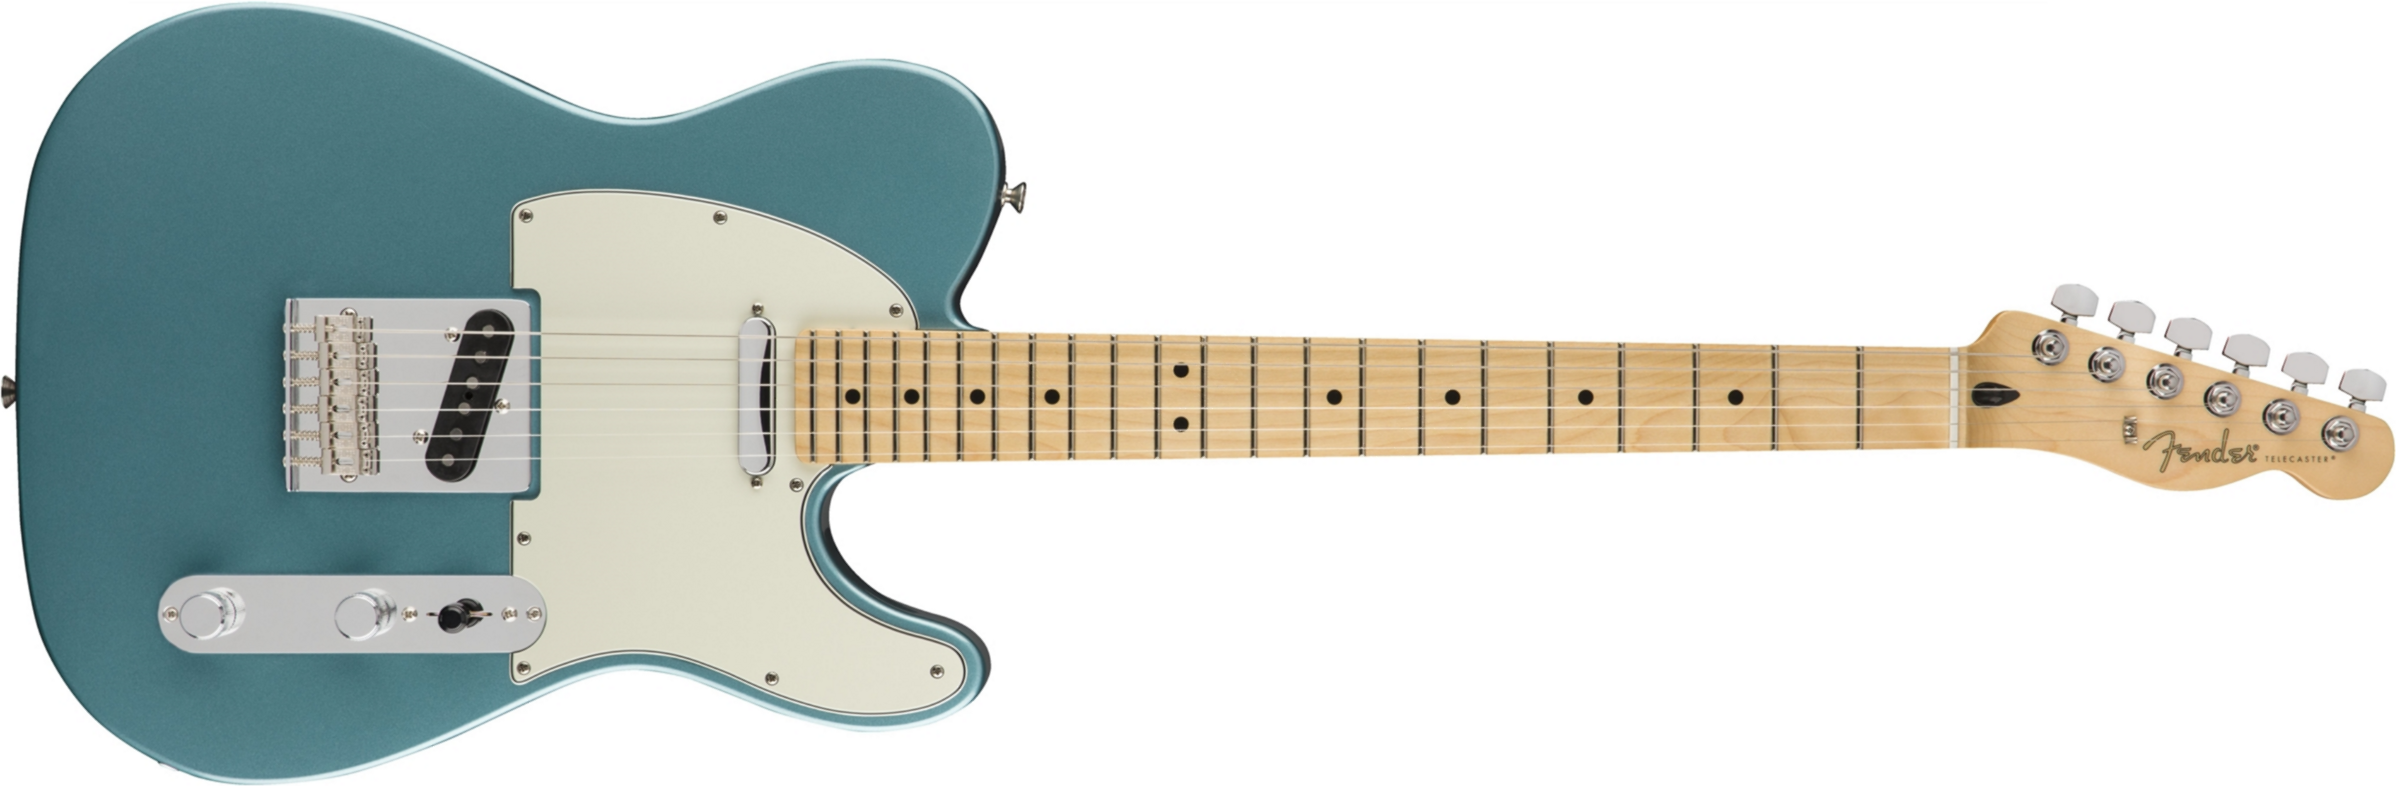 Fender Tele Player Mex Mn - Tidepool - Televorm elektrische gitaar - Main picture